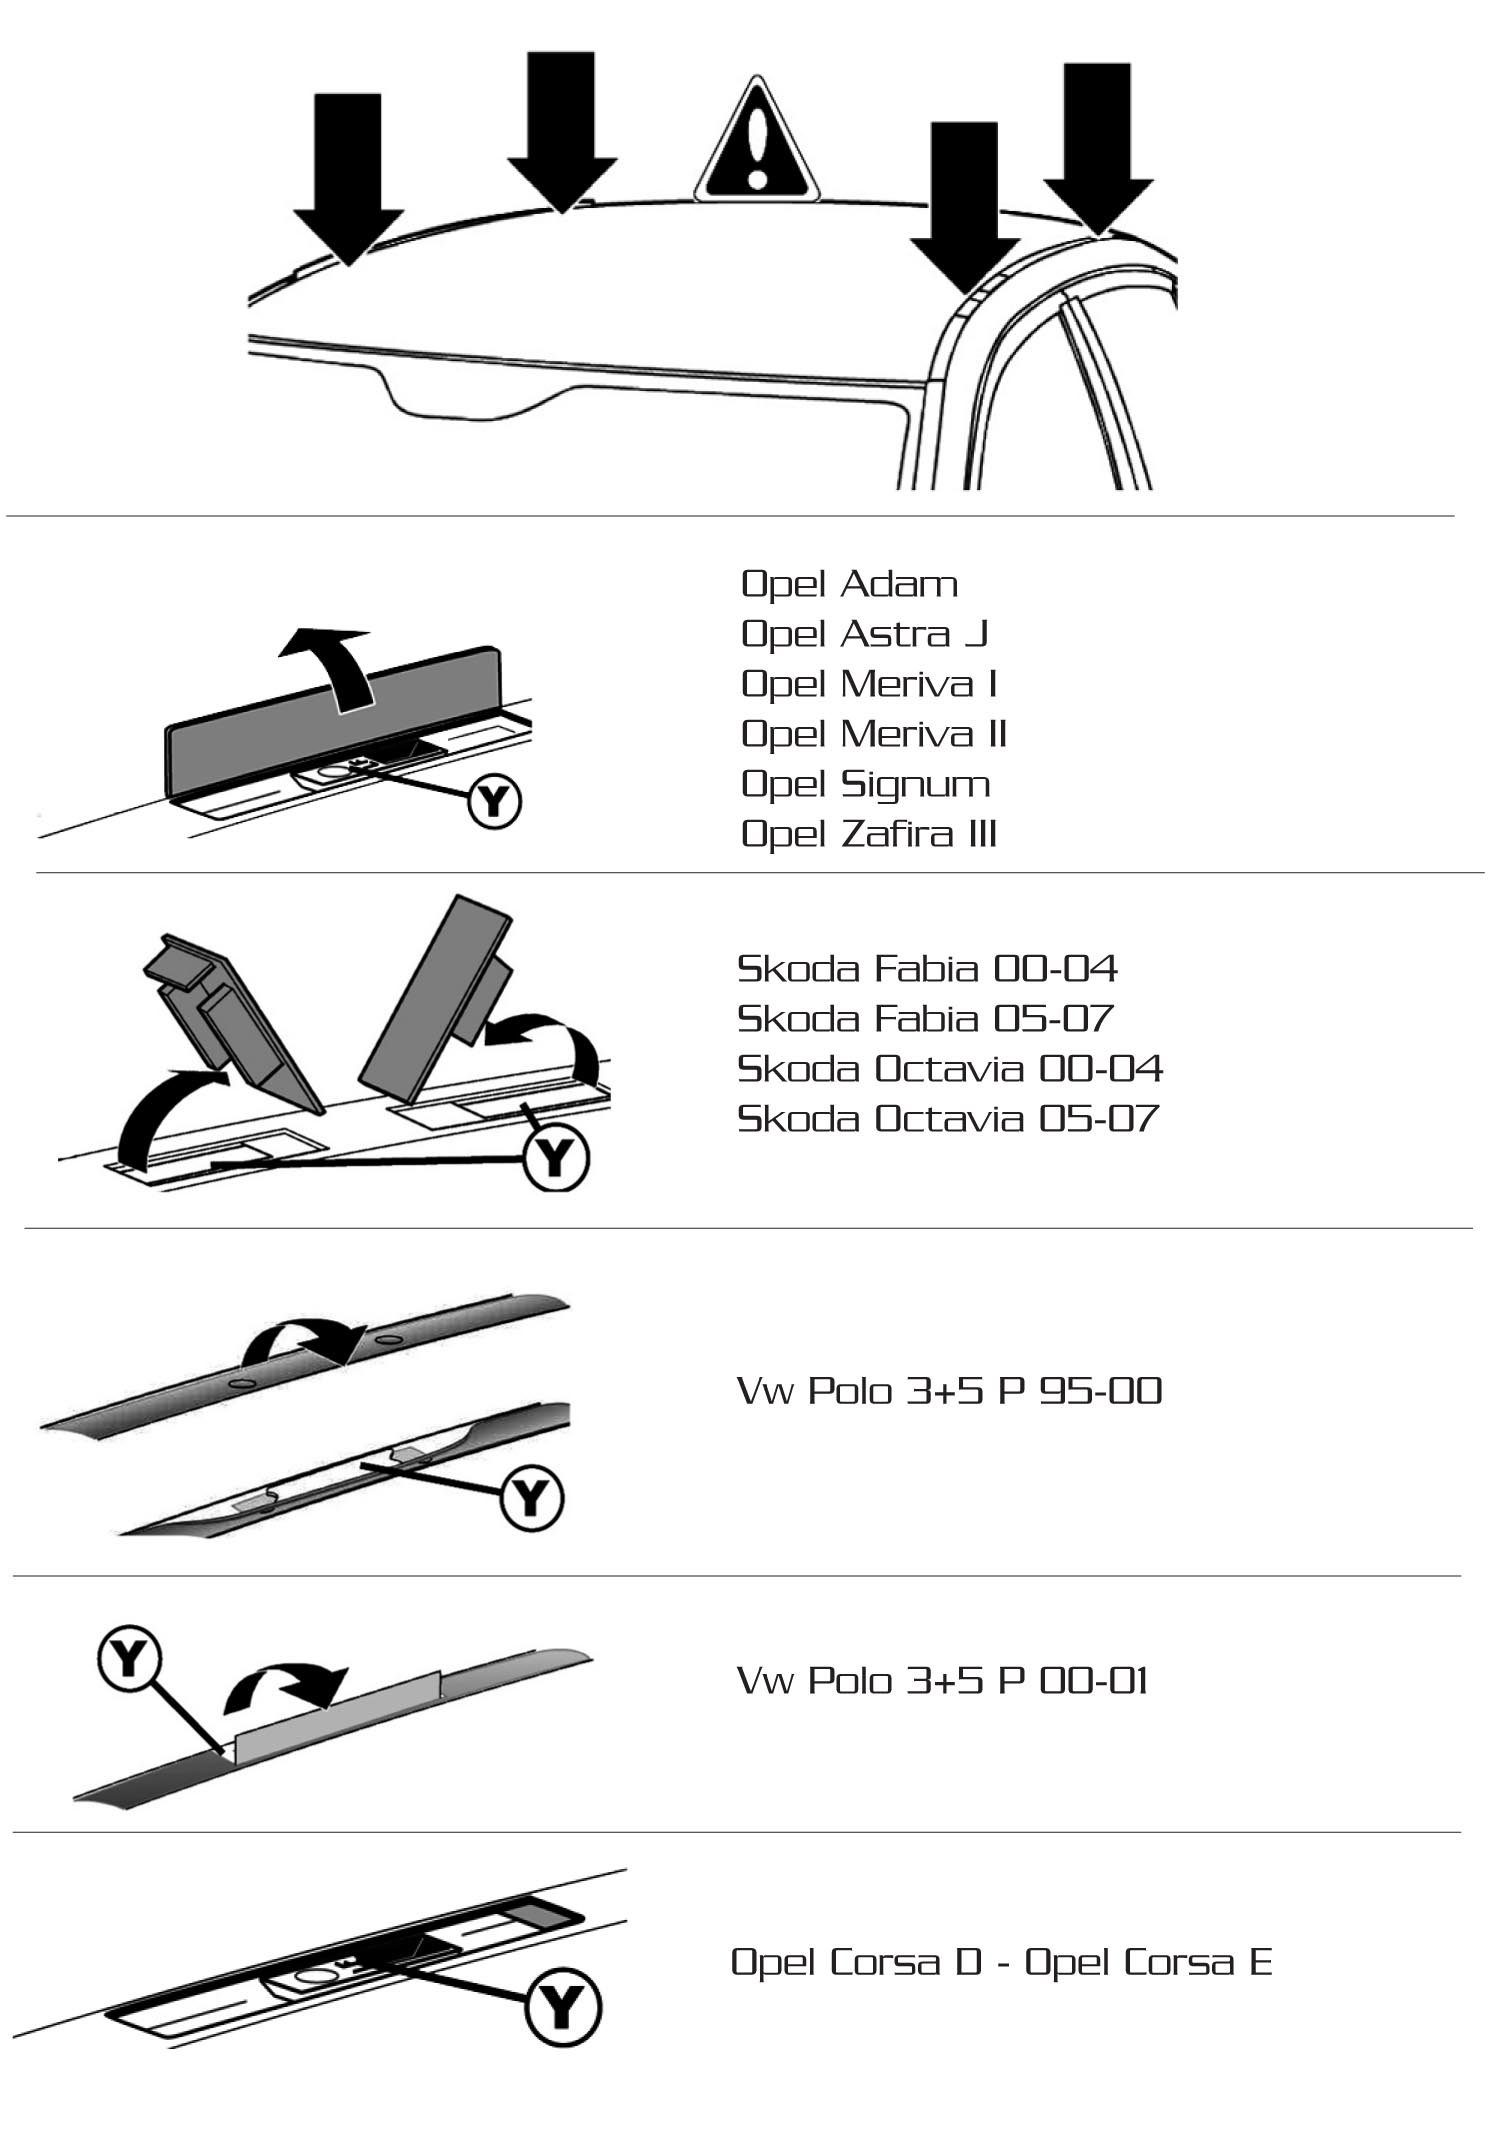 + Signum (5Türer) Dachbox, Opel Signum Original Stahl kompatibel Dachträger carbonlook (5Türer) mit 480Ltr Dachbox Opel 2003-2008 (Passend für Aurilis 2003-2008), VDP VDPCA480